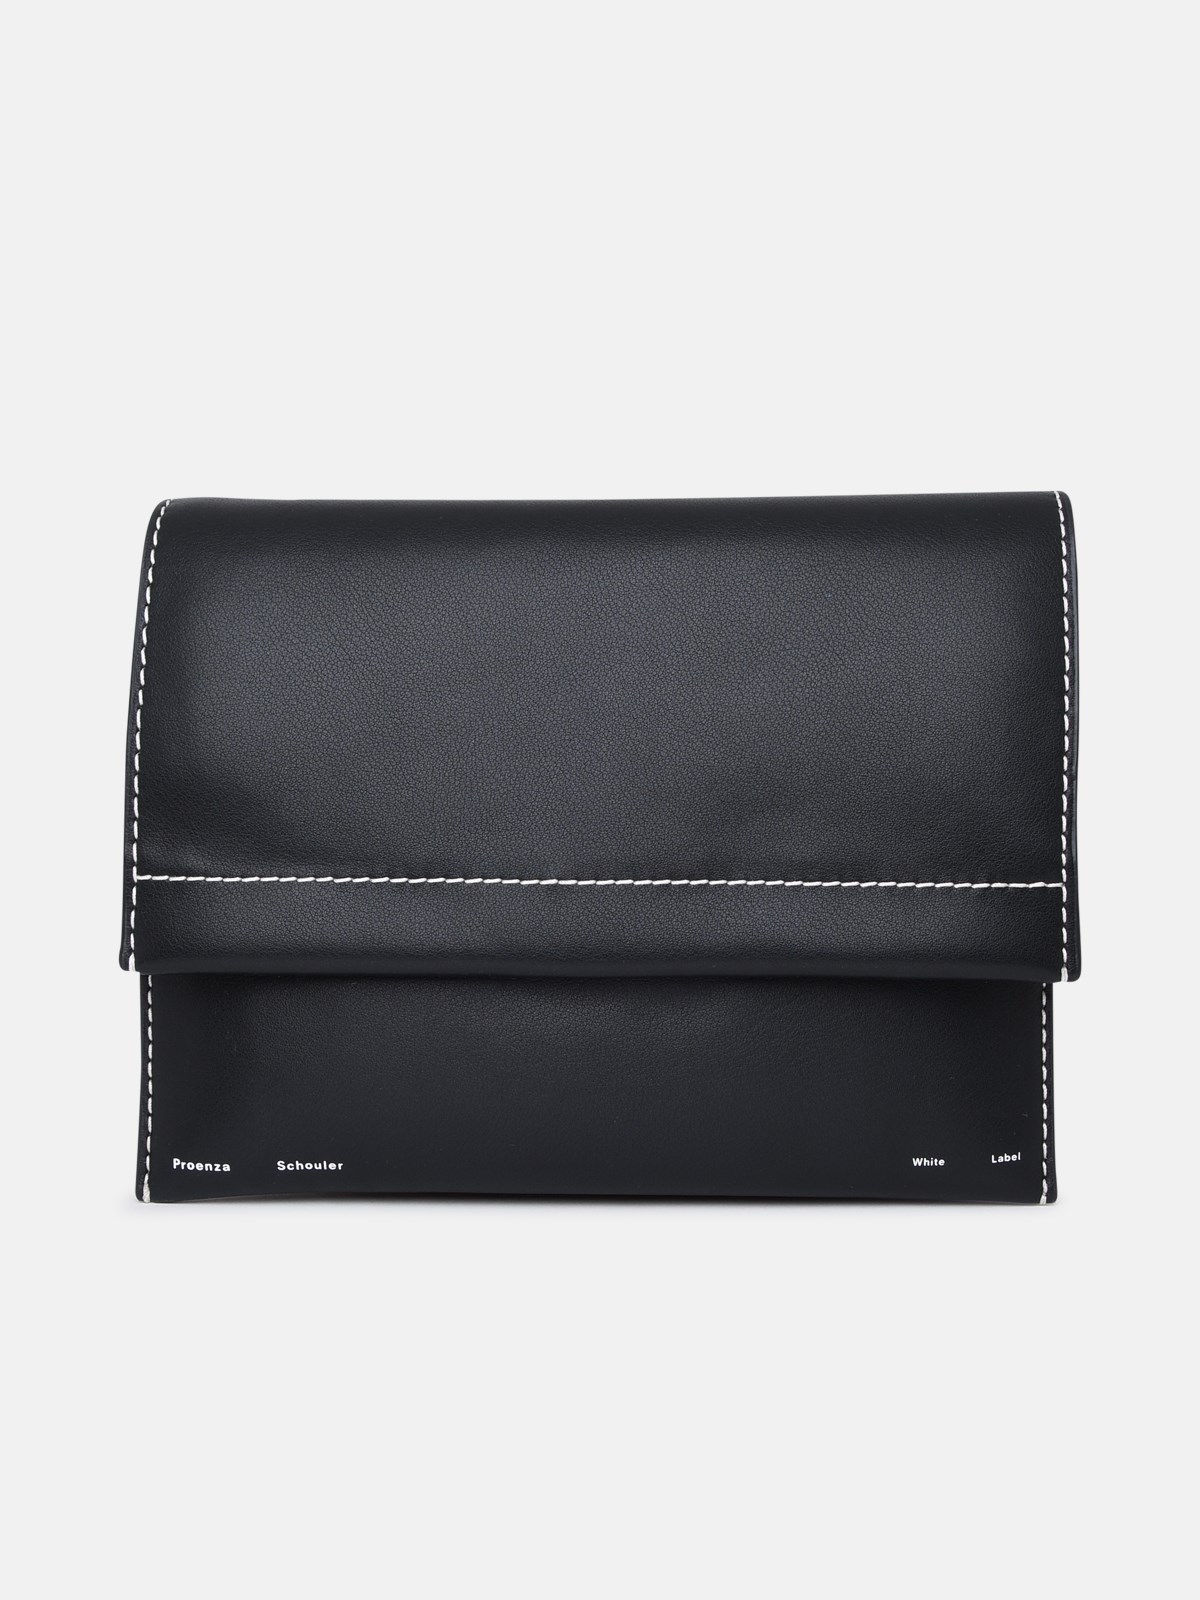 Proenza Schouler White Label Leather Accordion Bag In Black